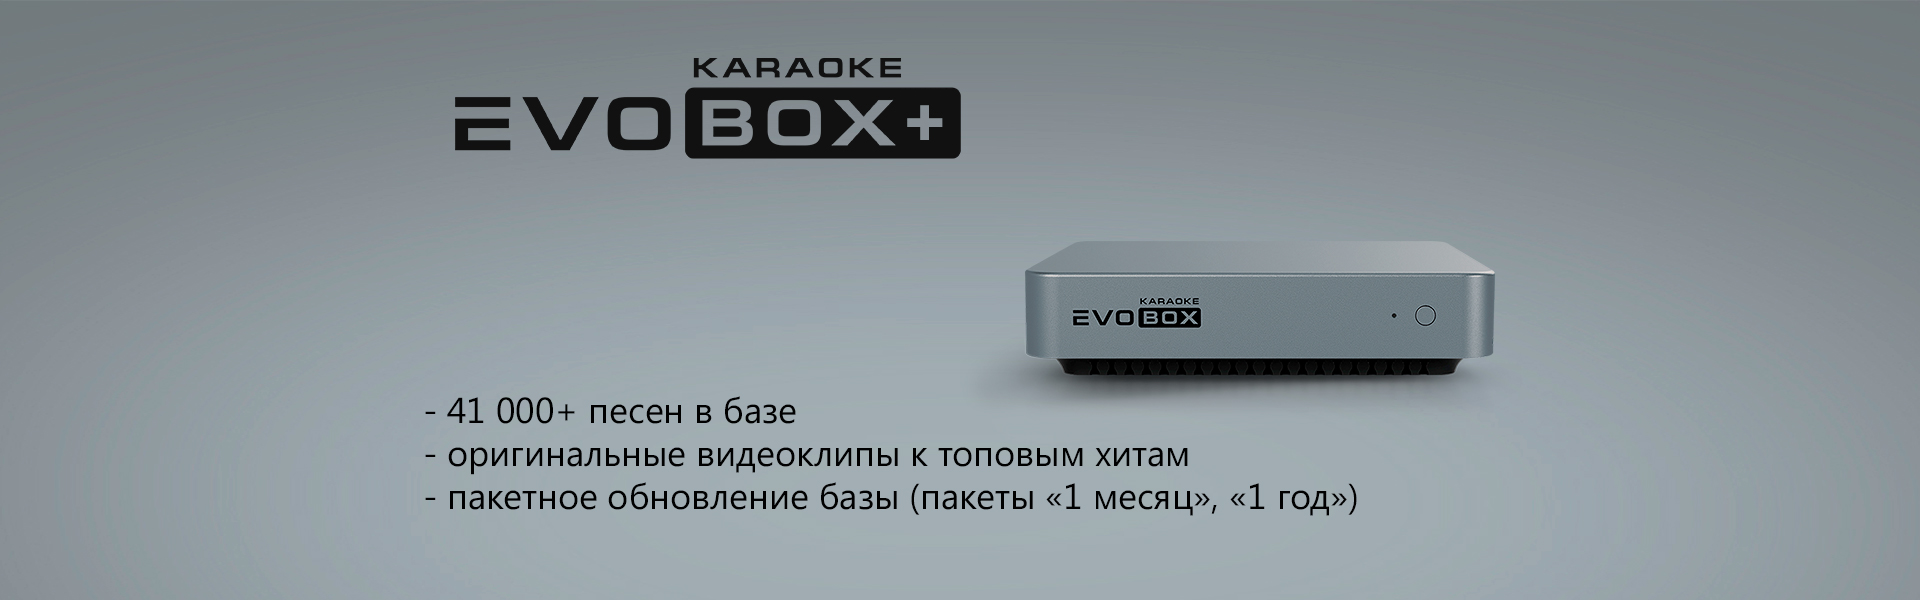 EvoBox+